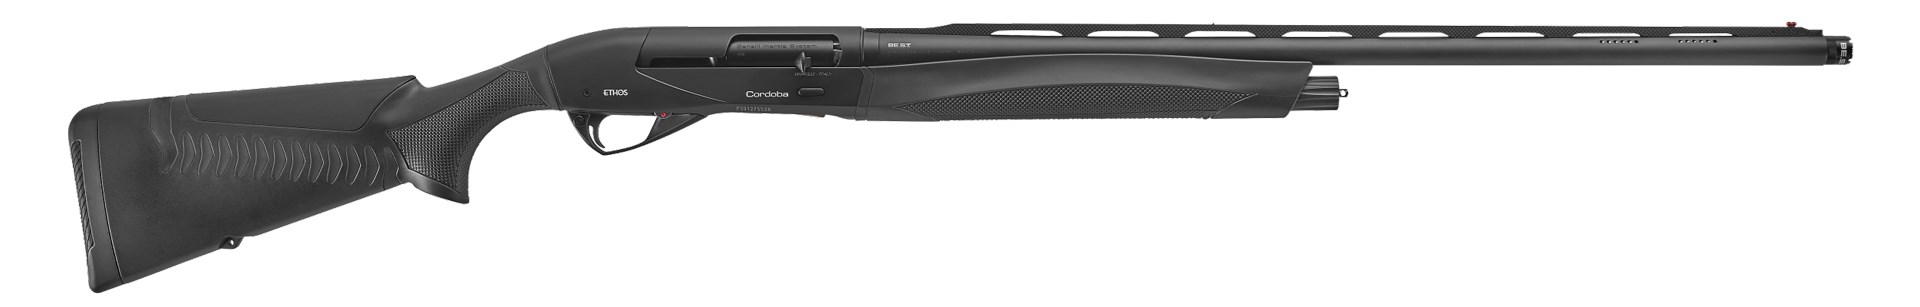 Benelli ETHOS Cordoba BE.S.T. shotgun 12 gauge black plastic stock black metal gun